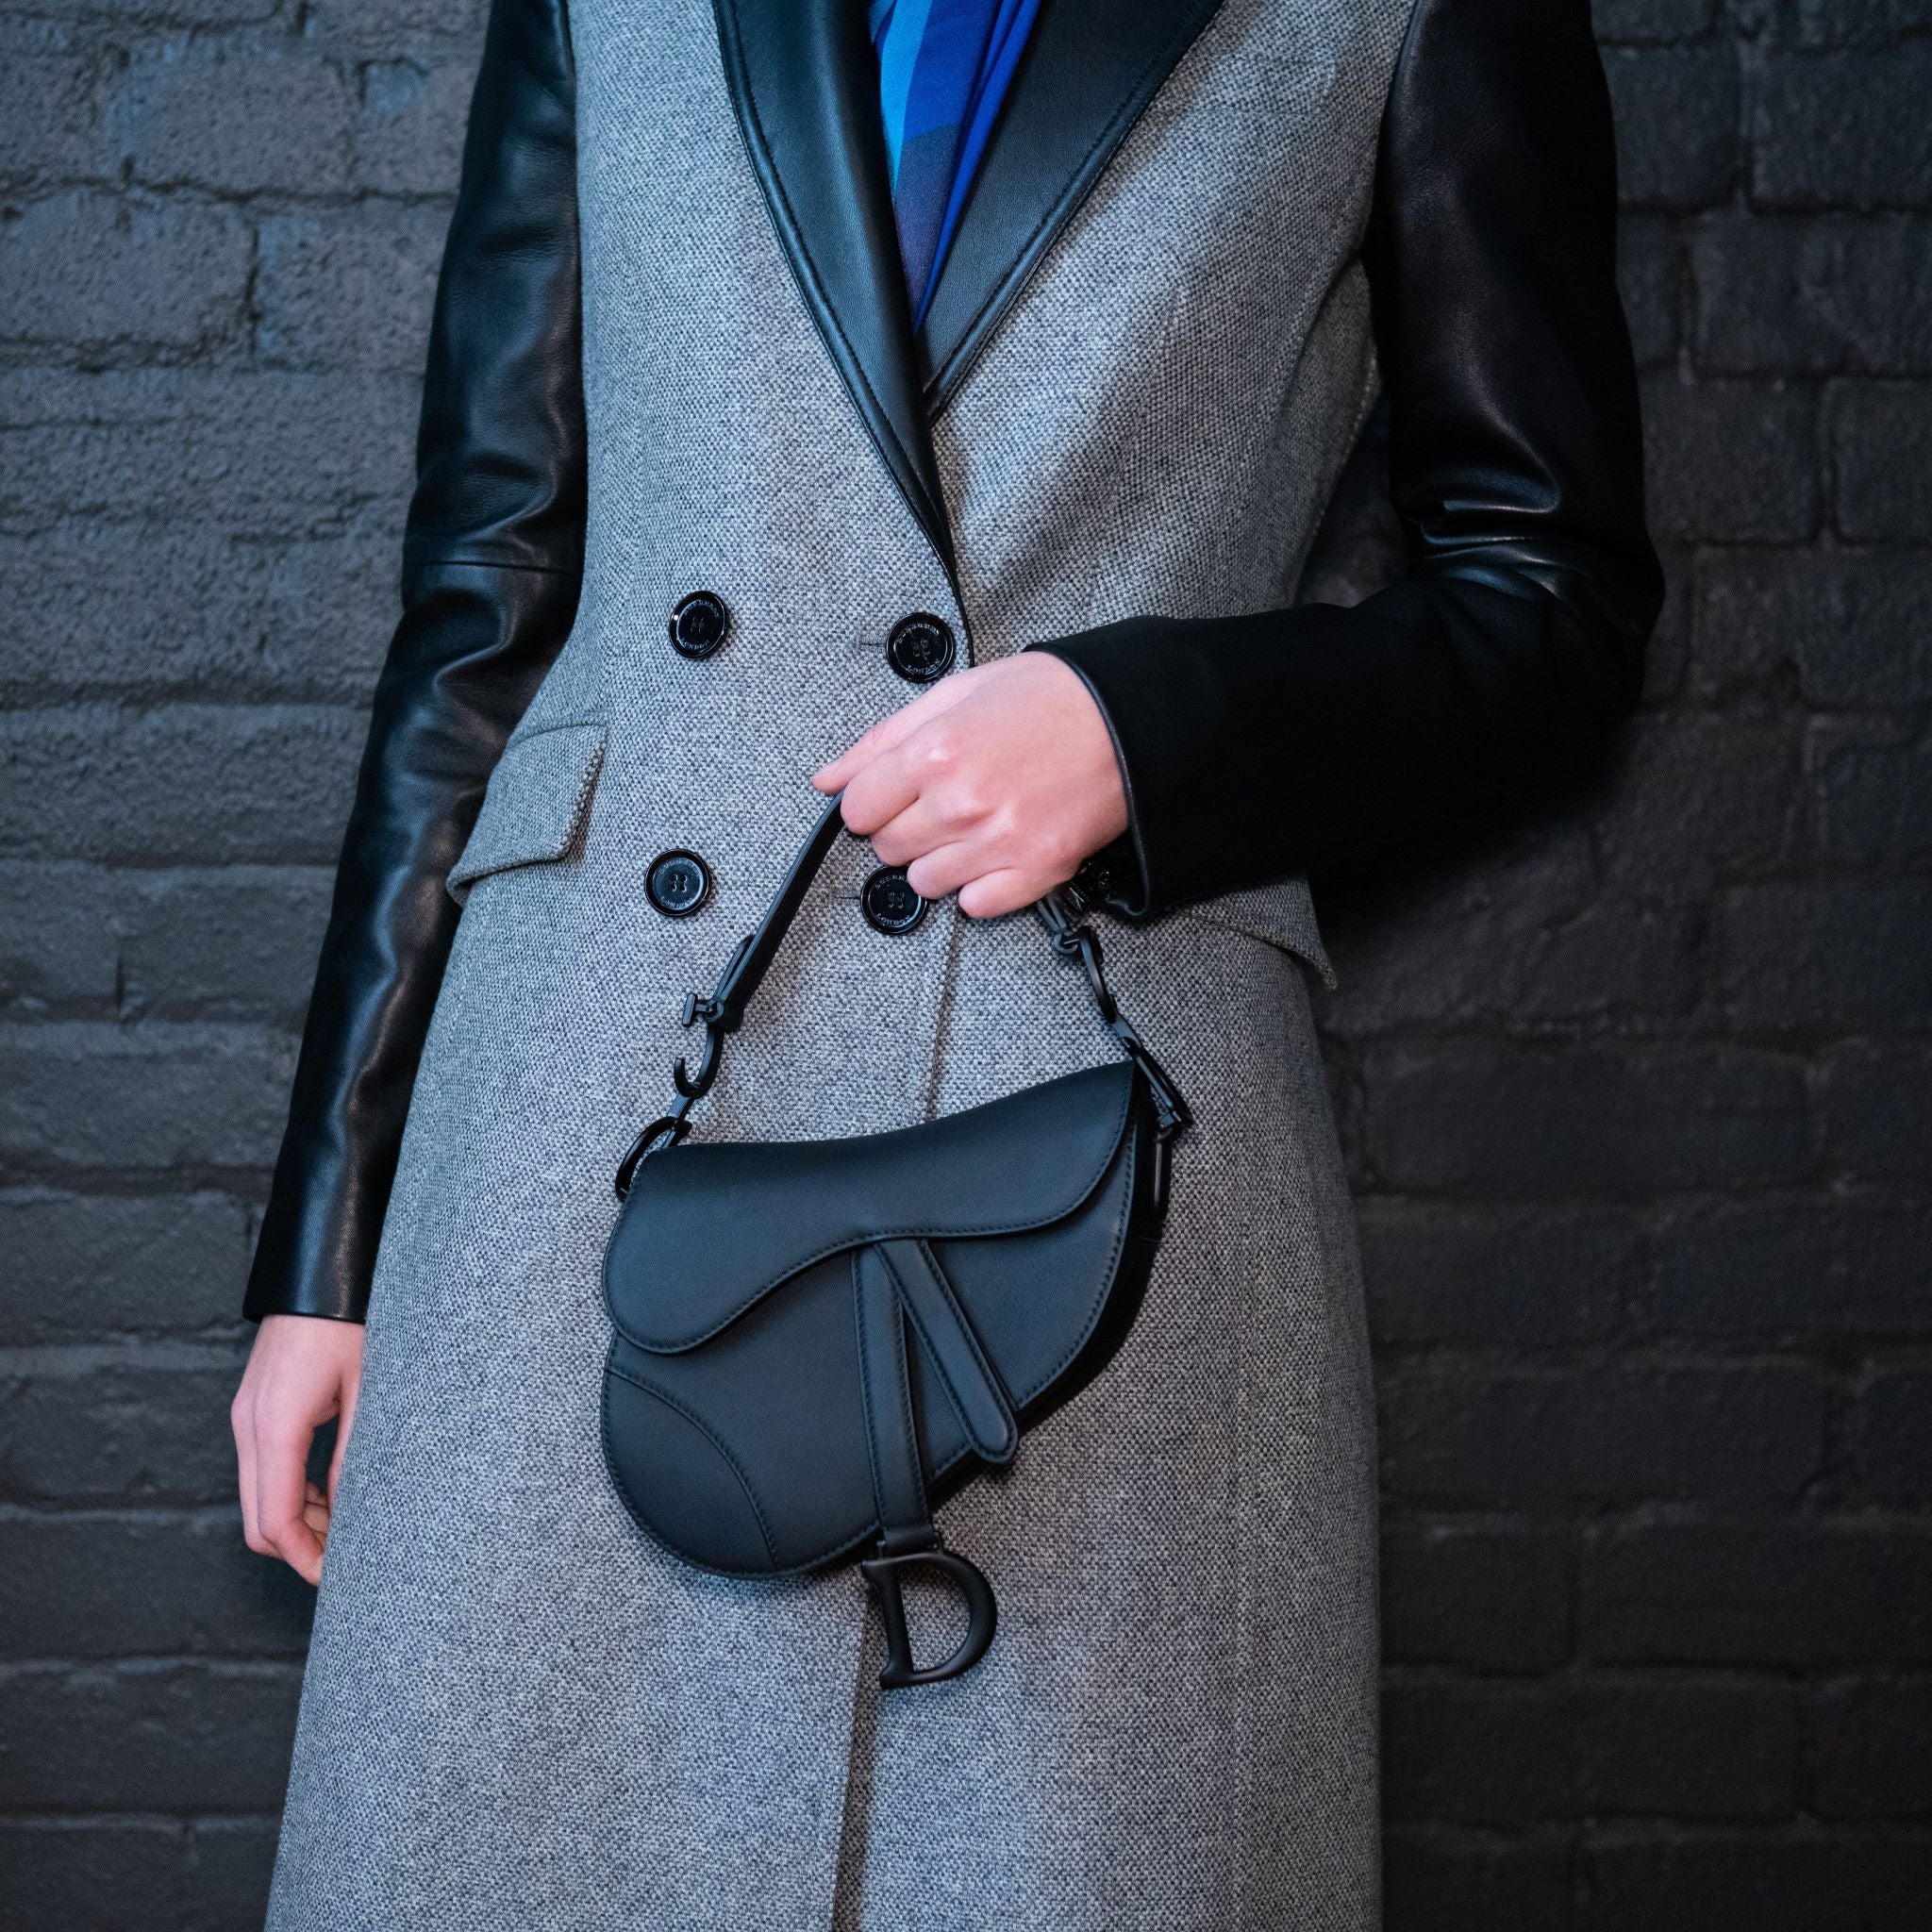 Dior Saddle Bag Calfskin Mini Black